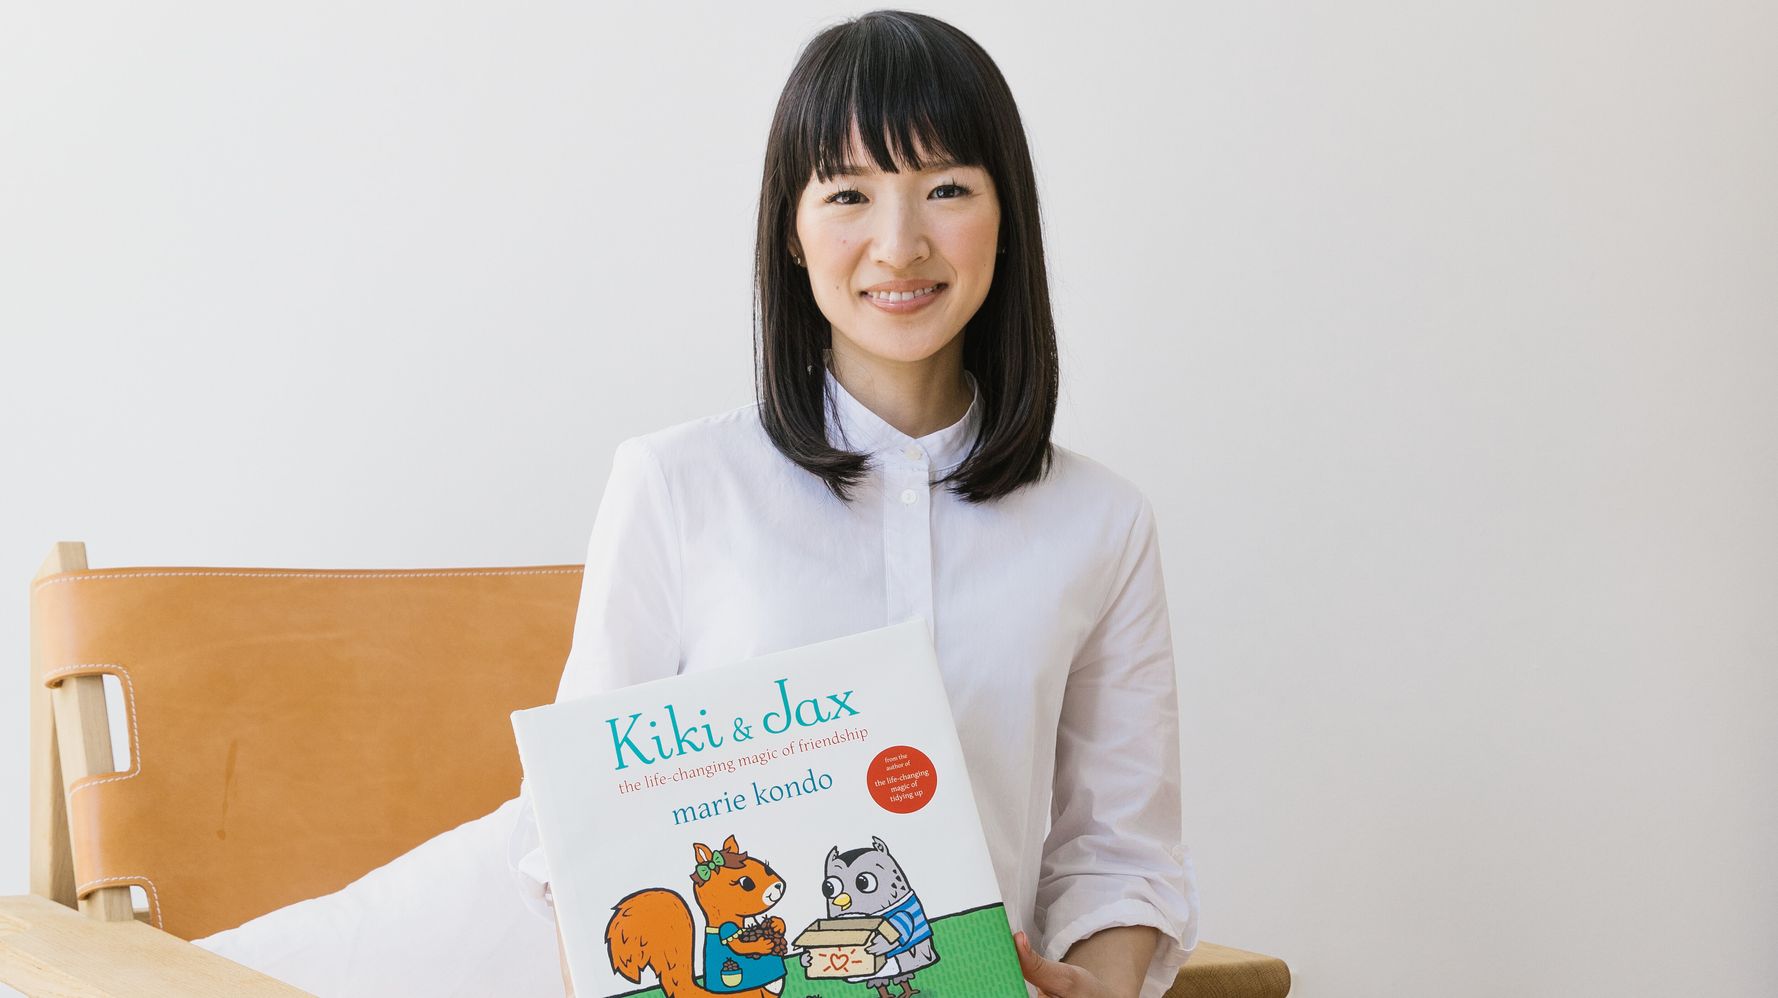 Marie Kondo Method - Marie Kondo Talks Tidying Up With Kids And Her New  Book 'Kiki & Jax' - Parade